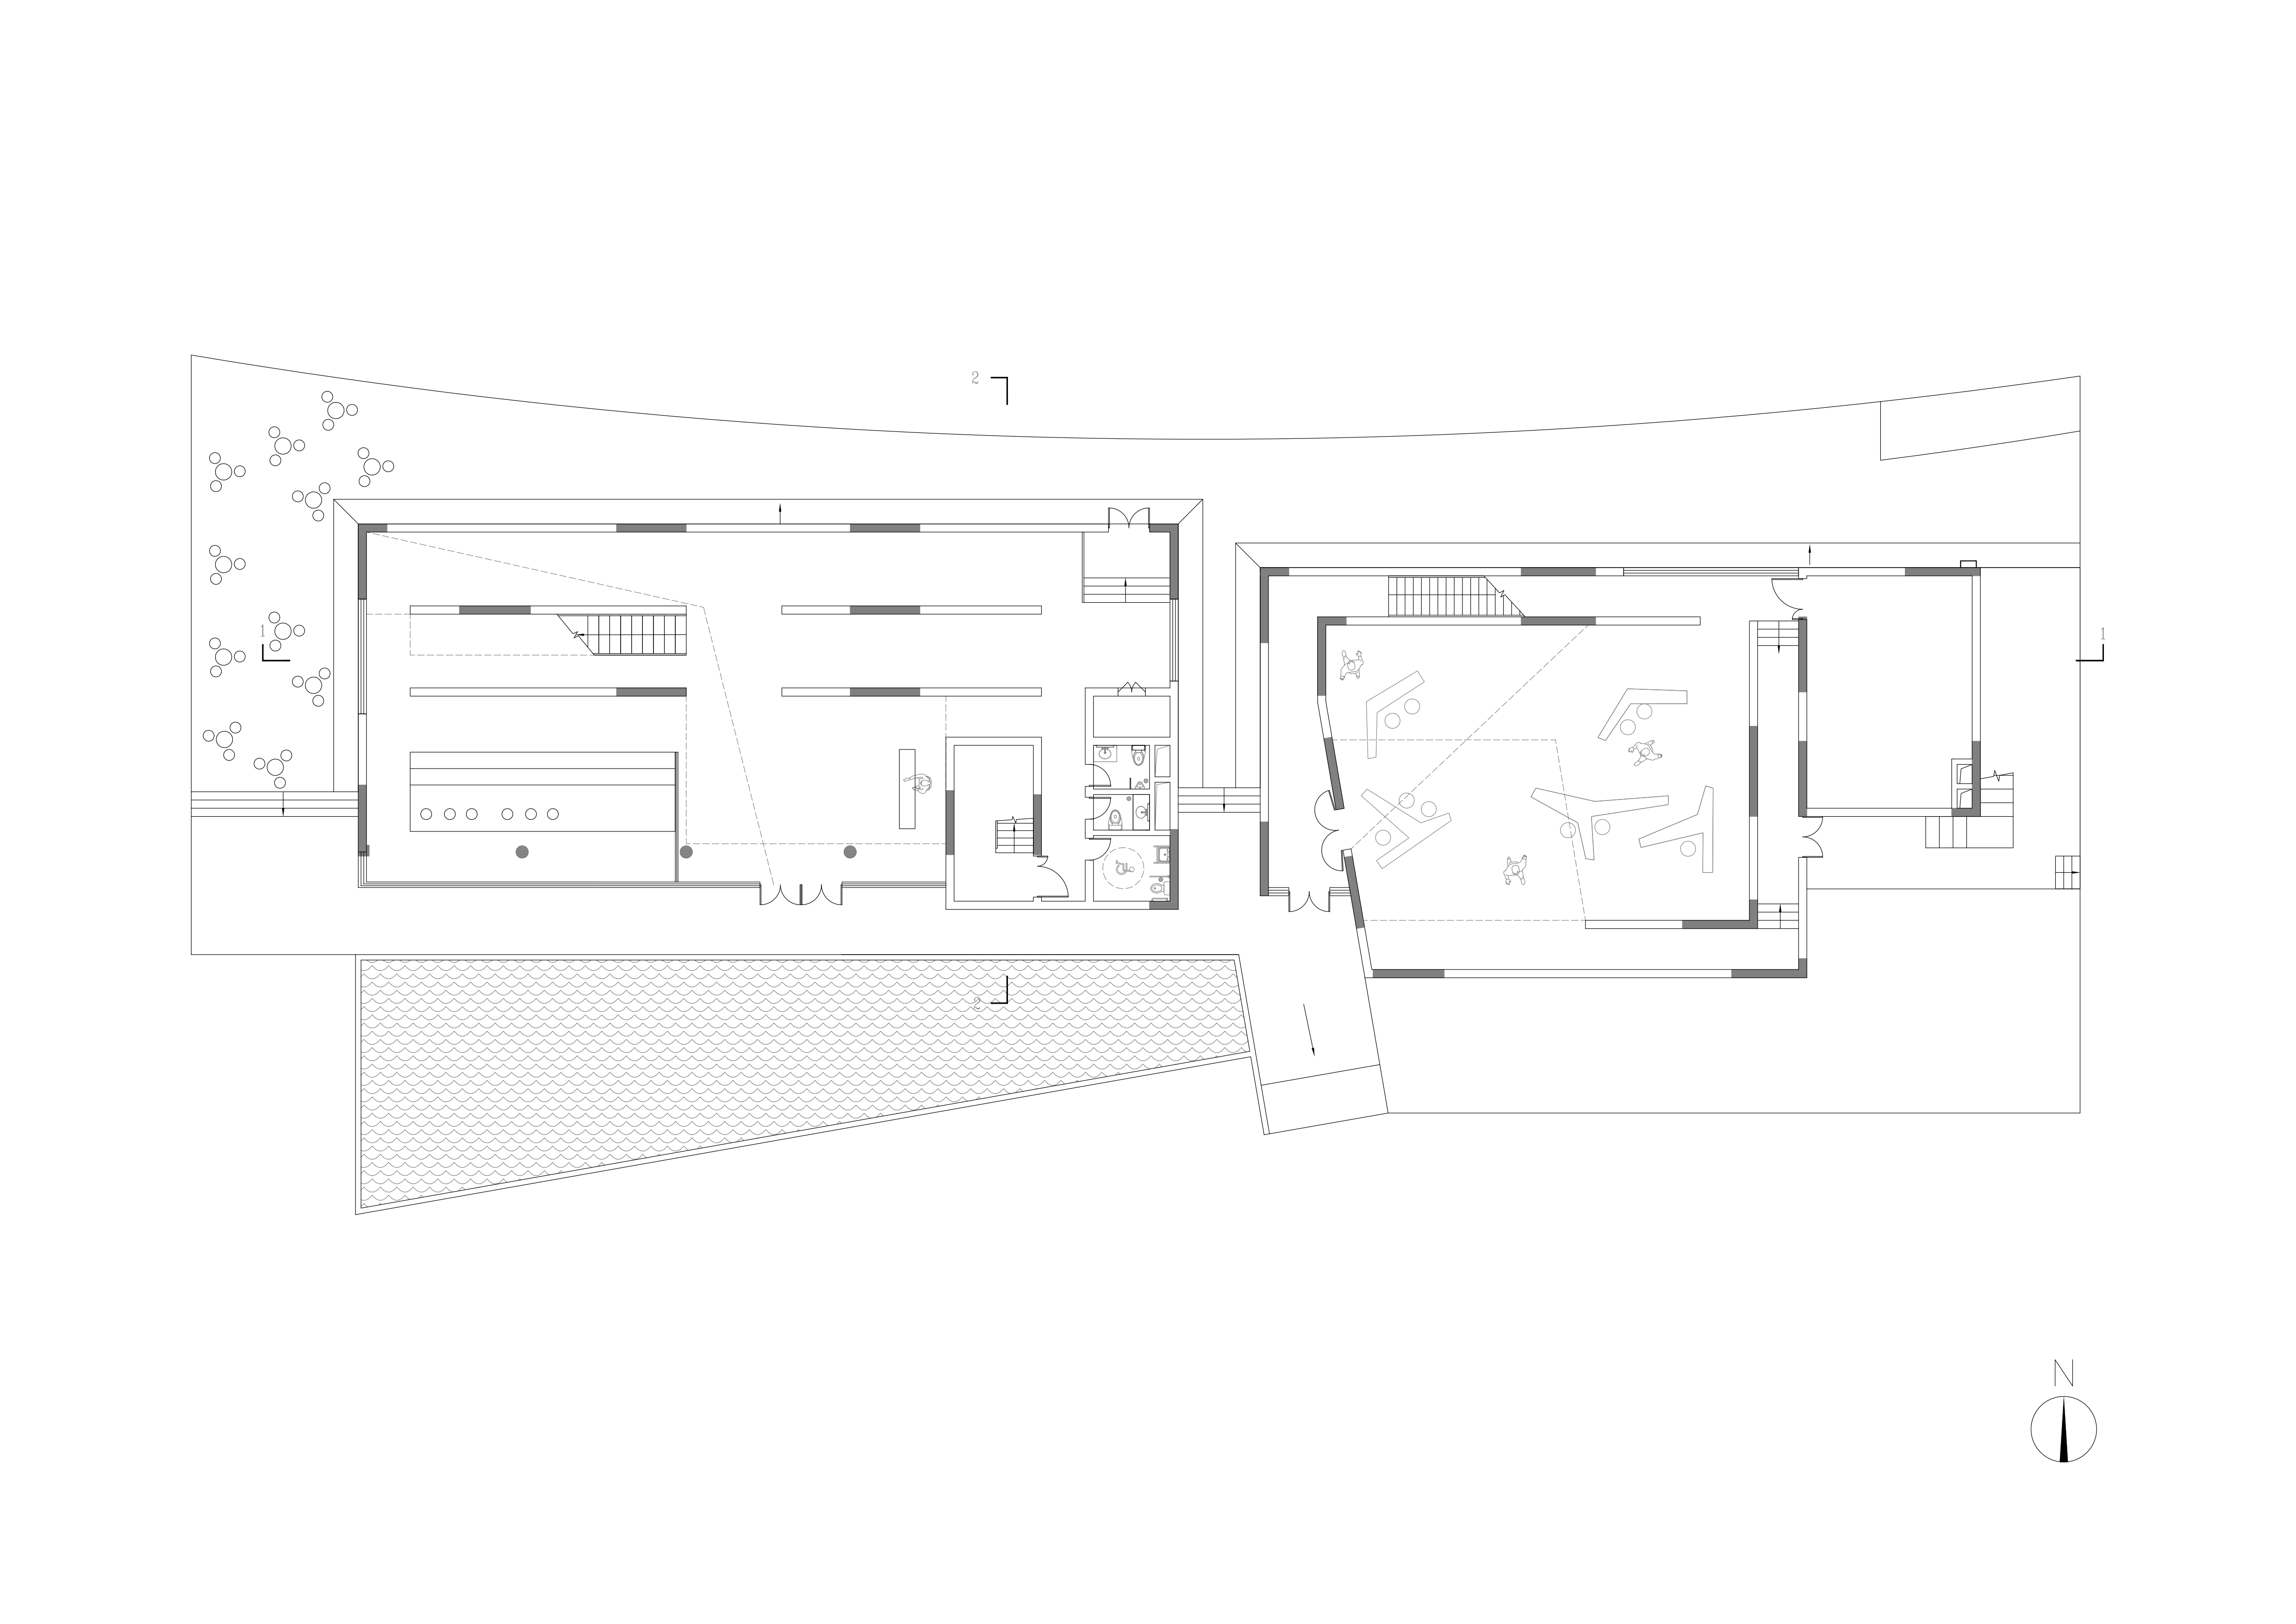 02 - Ground Floor Plan.jpg